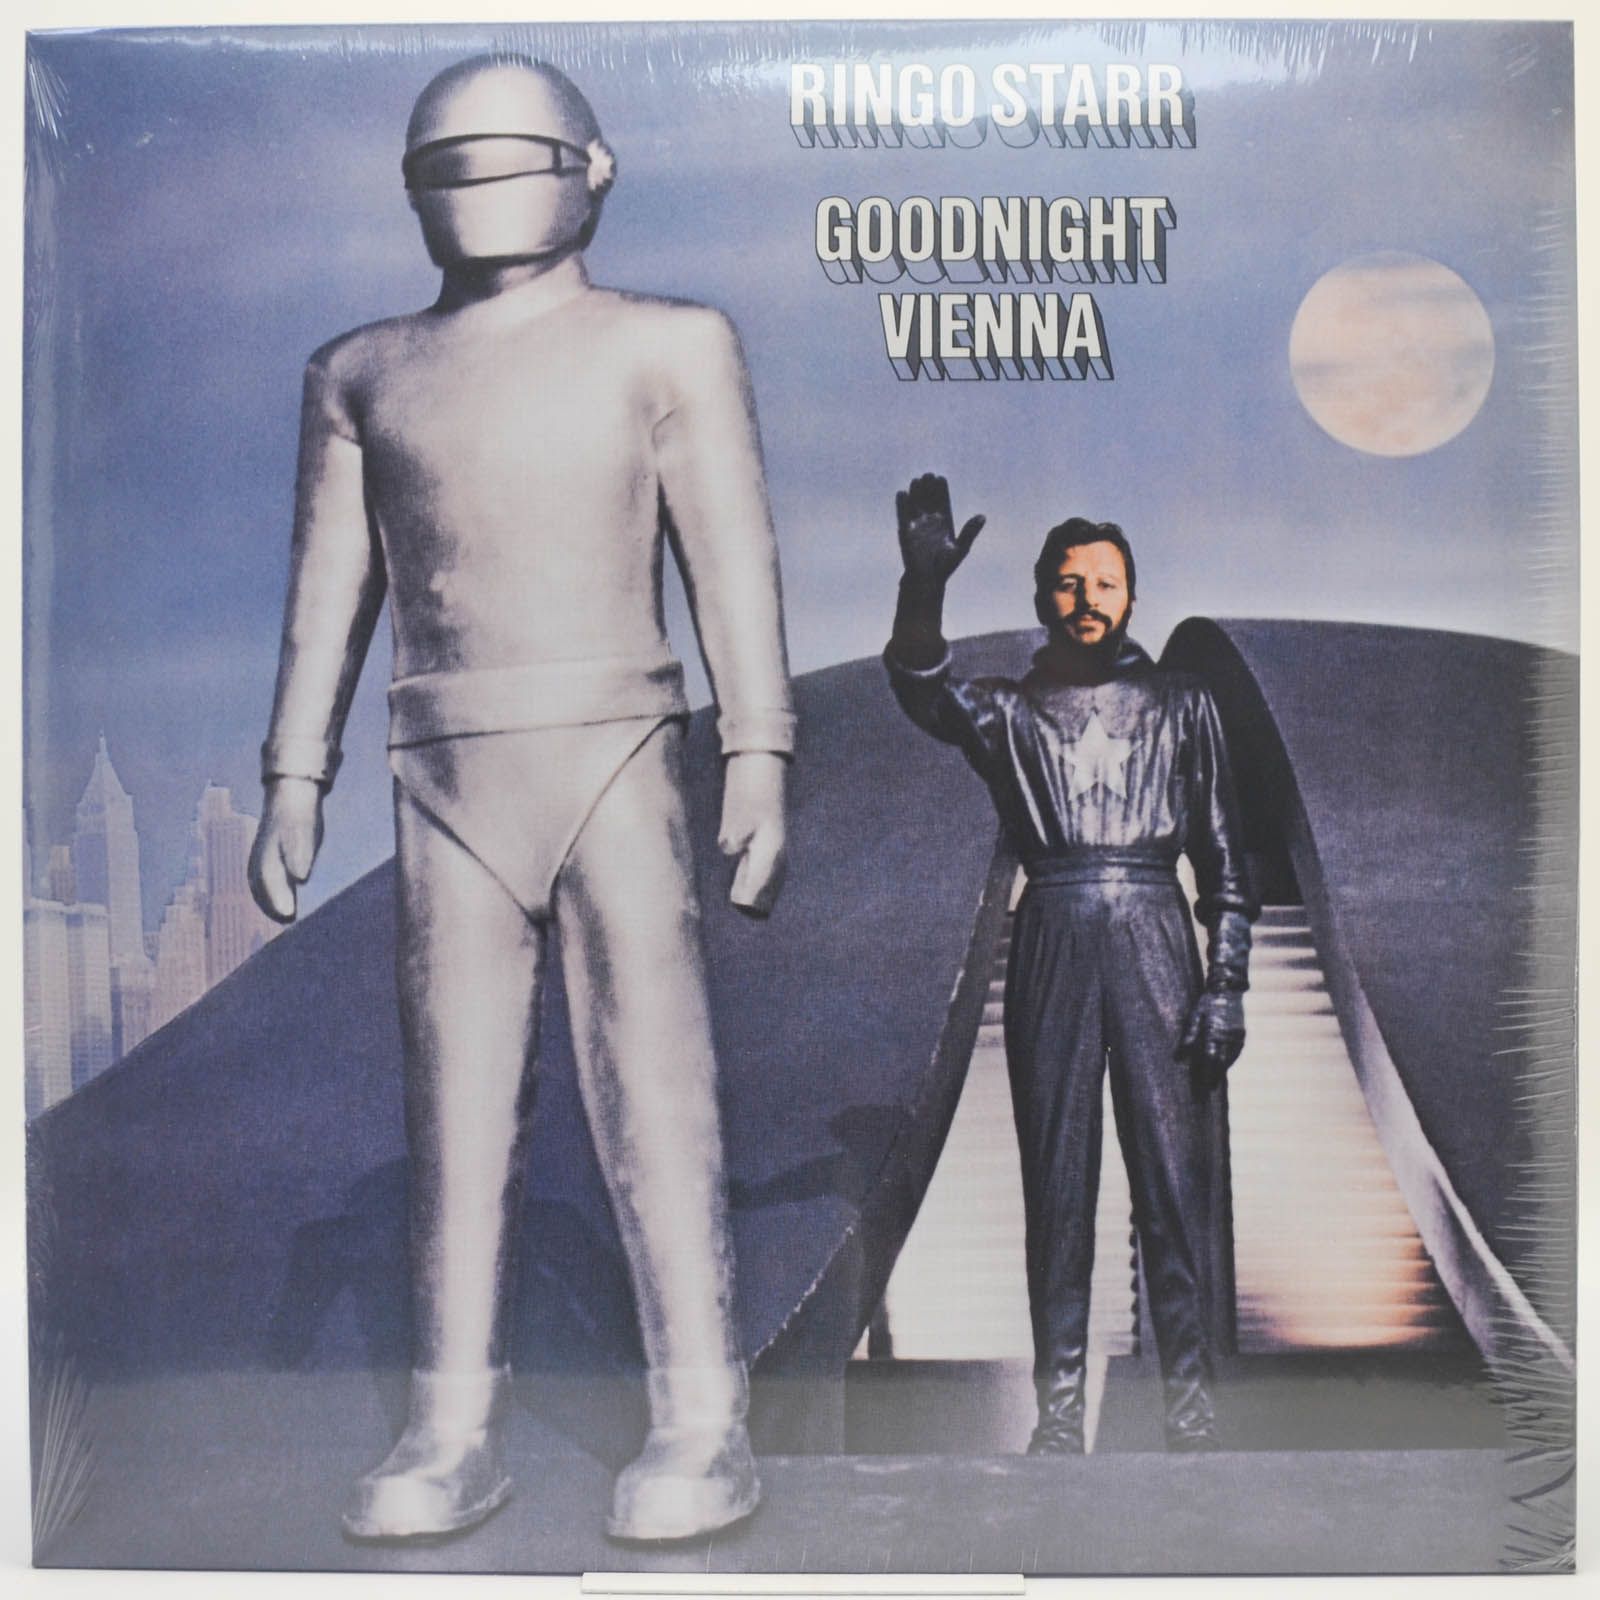 Ringo Starr — Goodnight Vienna, 1974